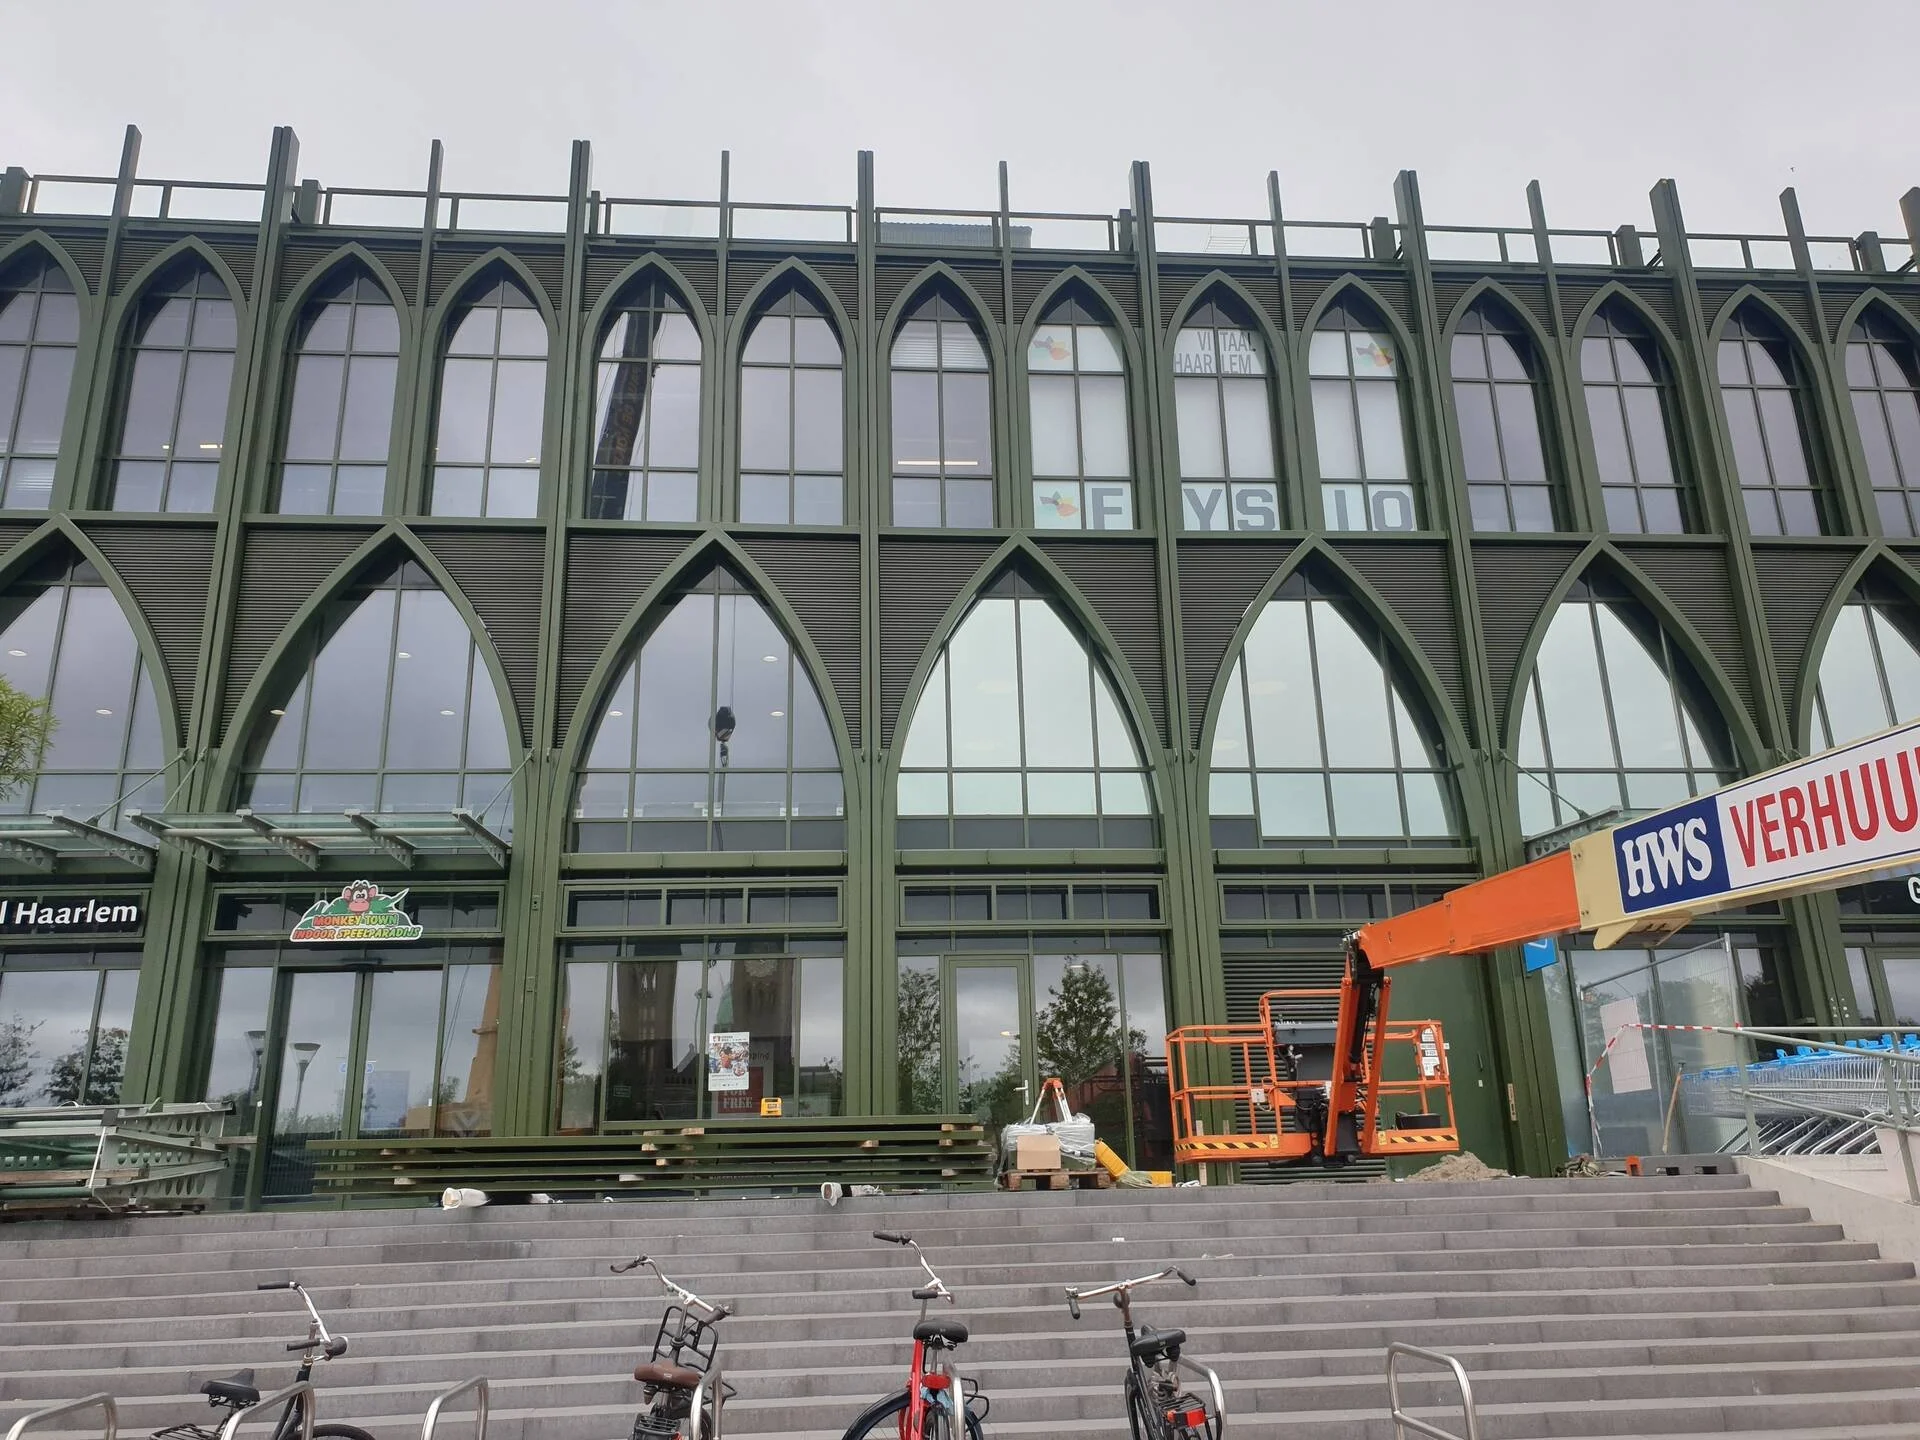 Plaza West Haarlem project afgerond